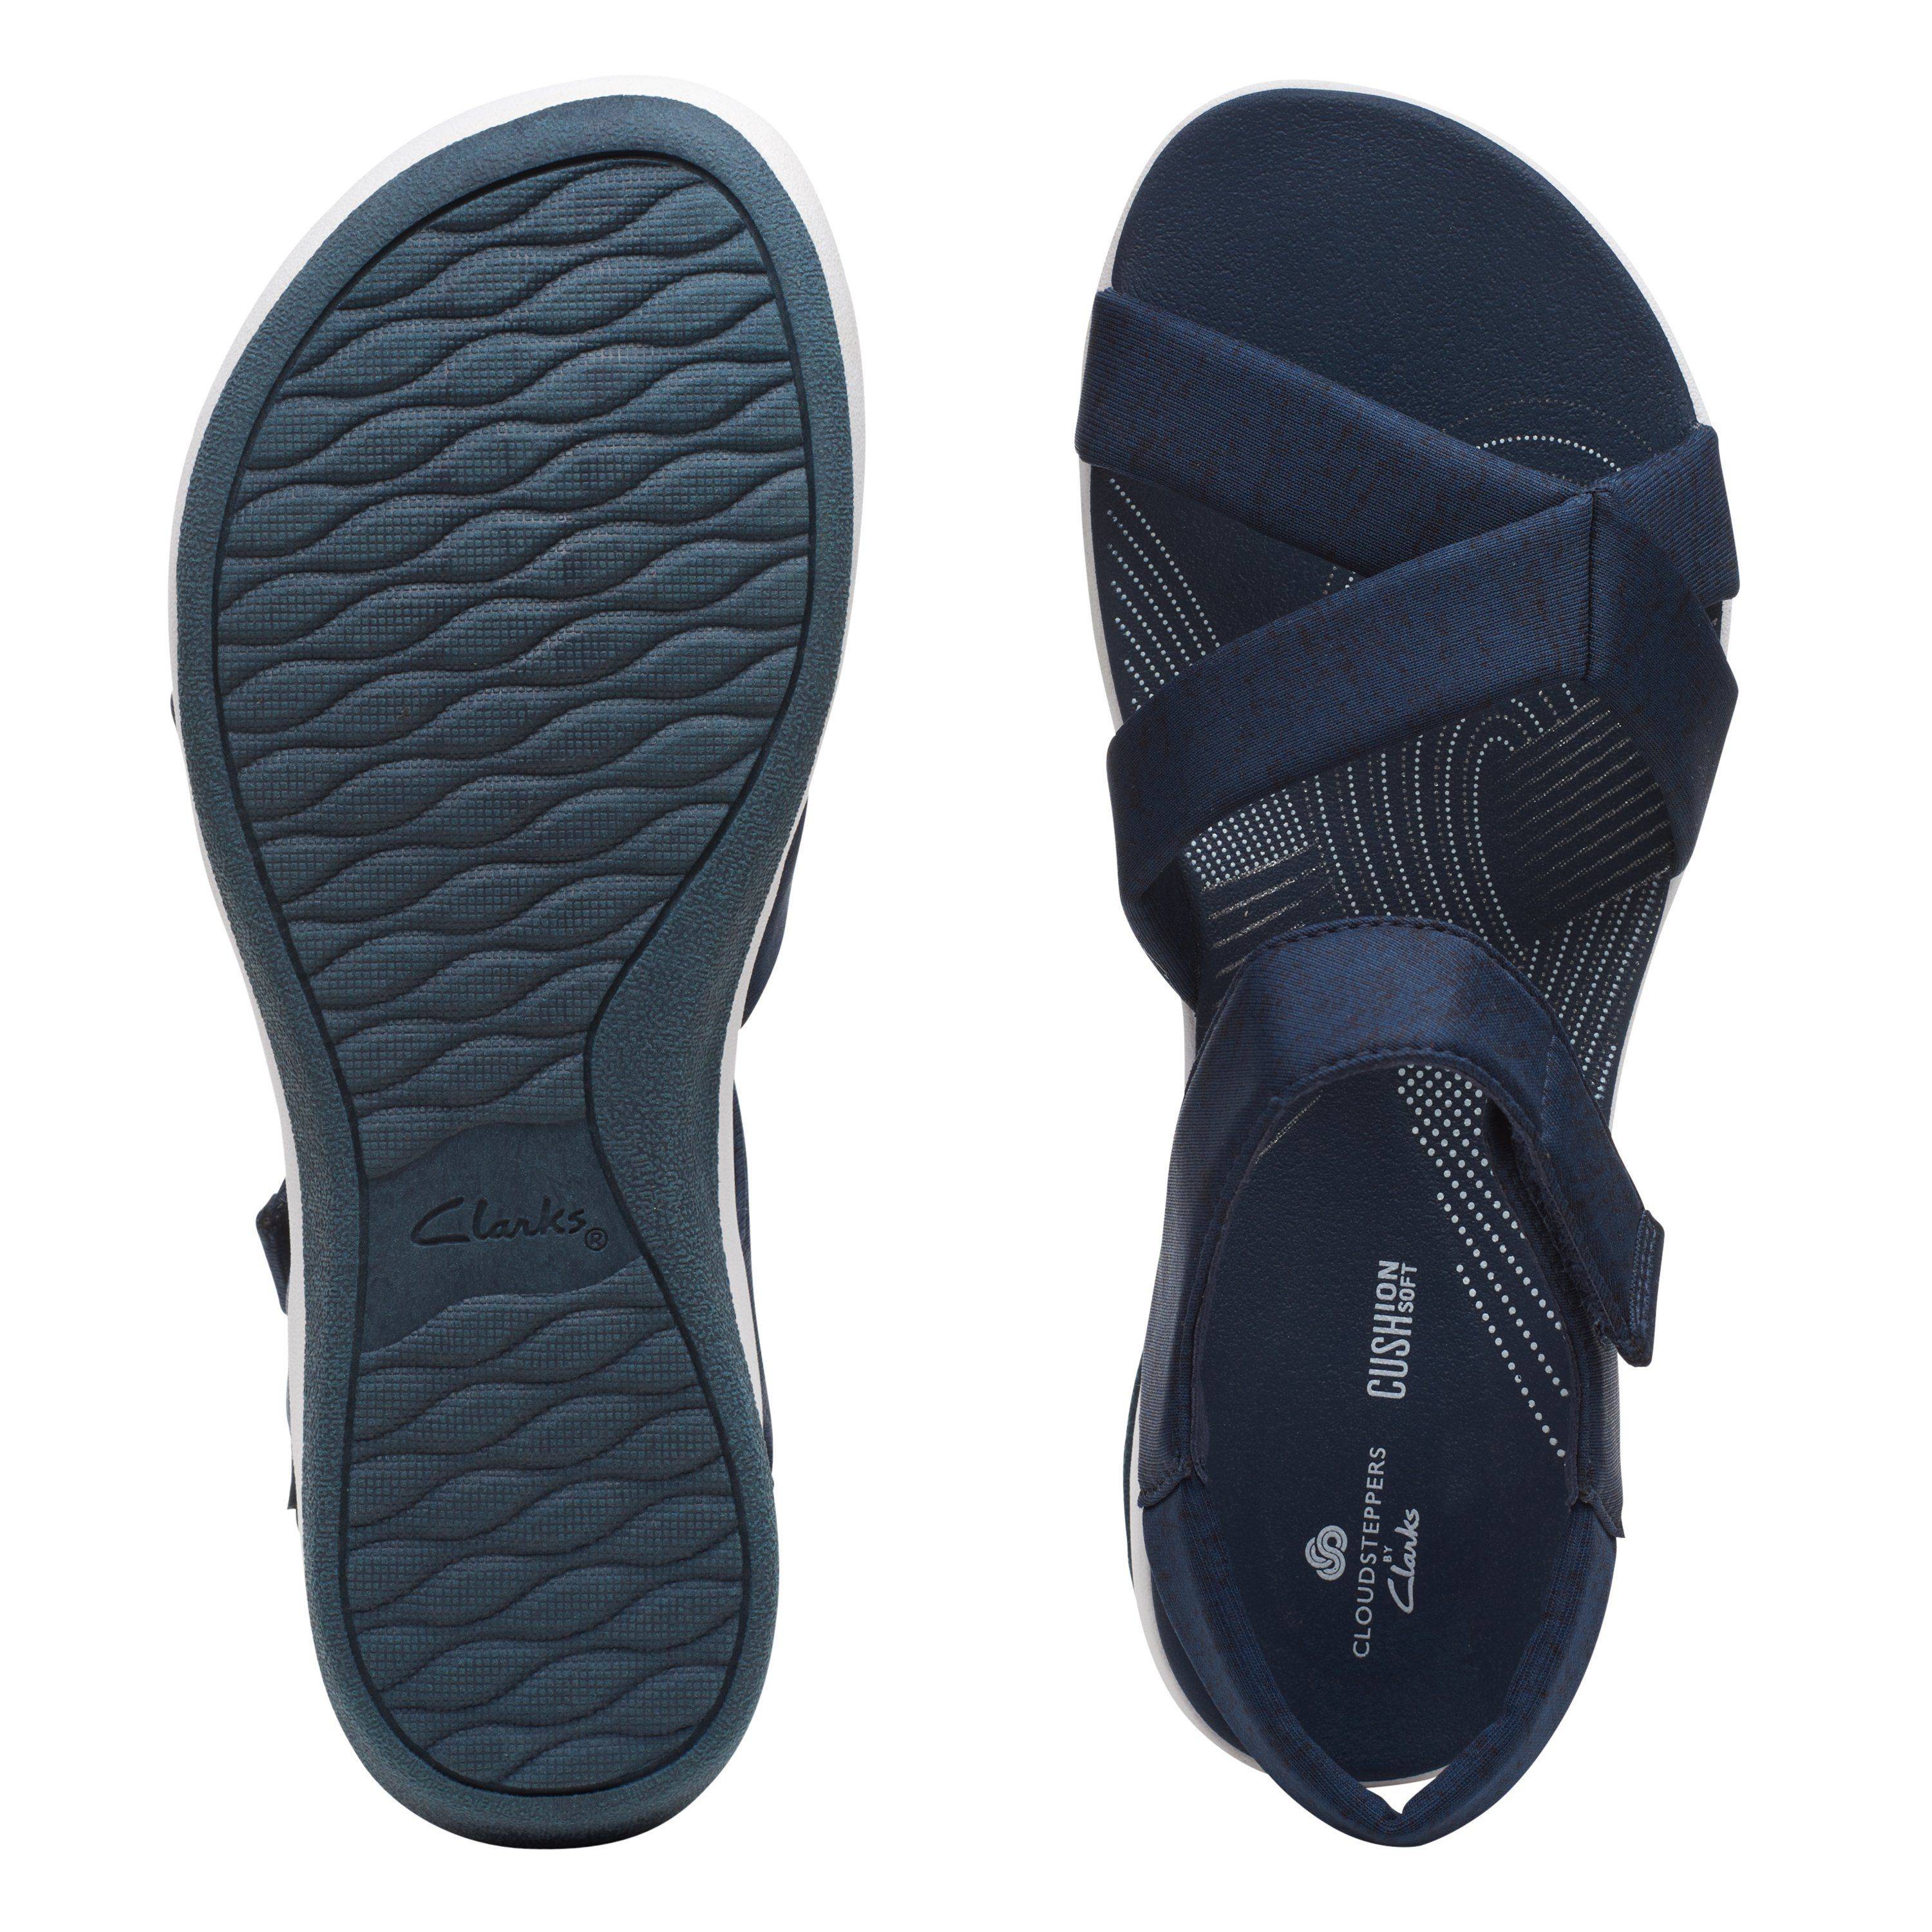 Женские сандалии Clarks, синие, цвет синий, размер 39.5 - фото 7